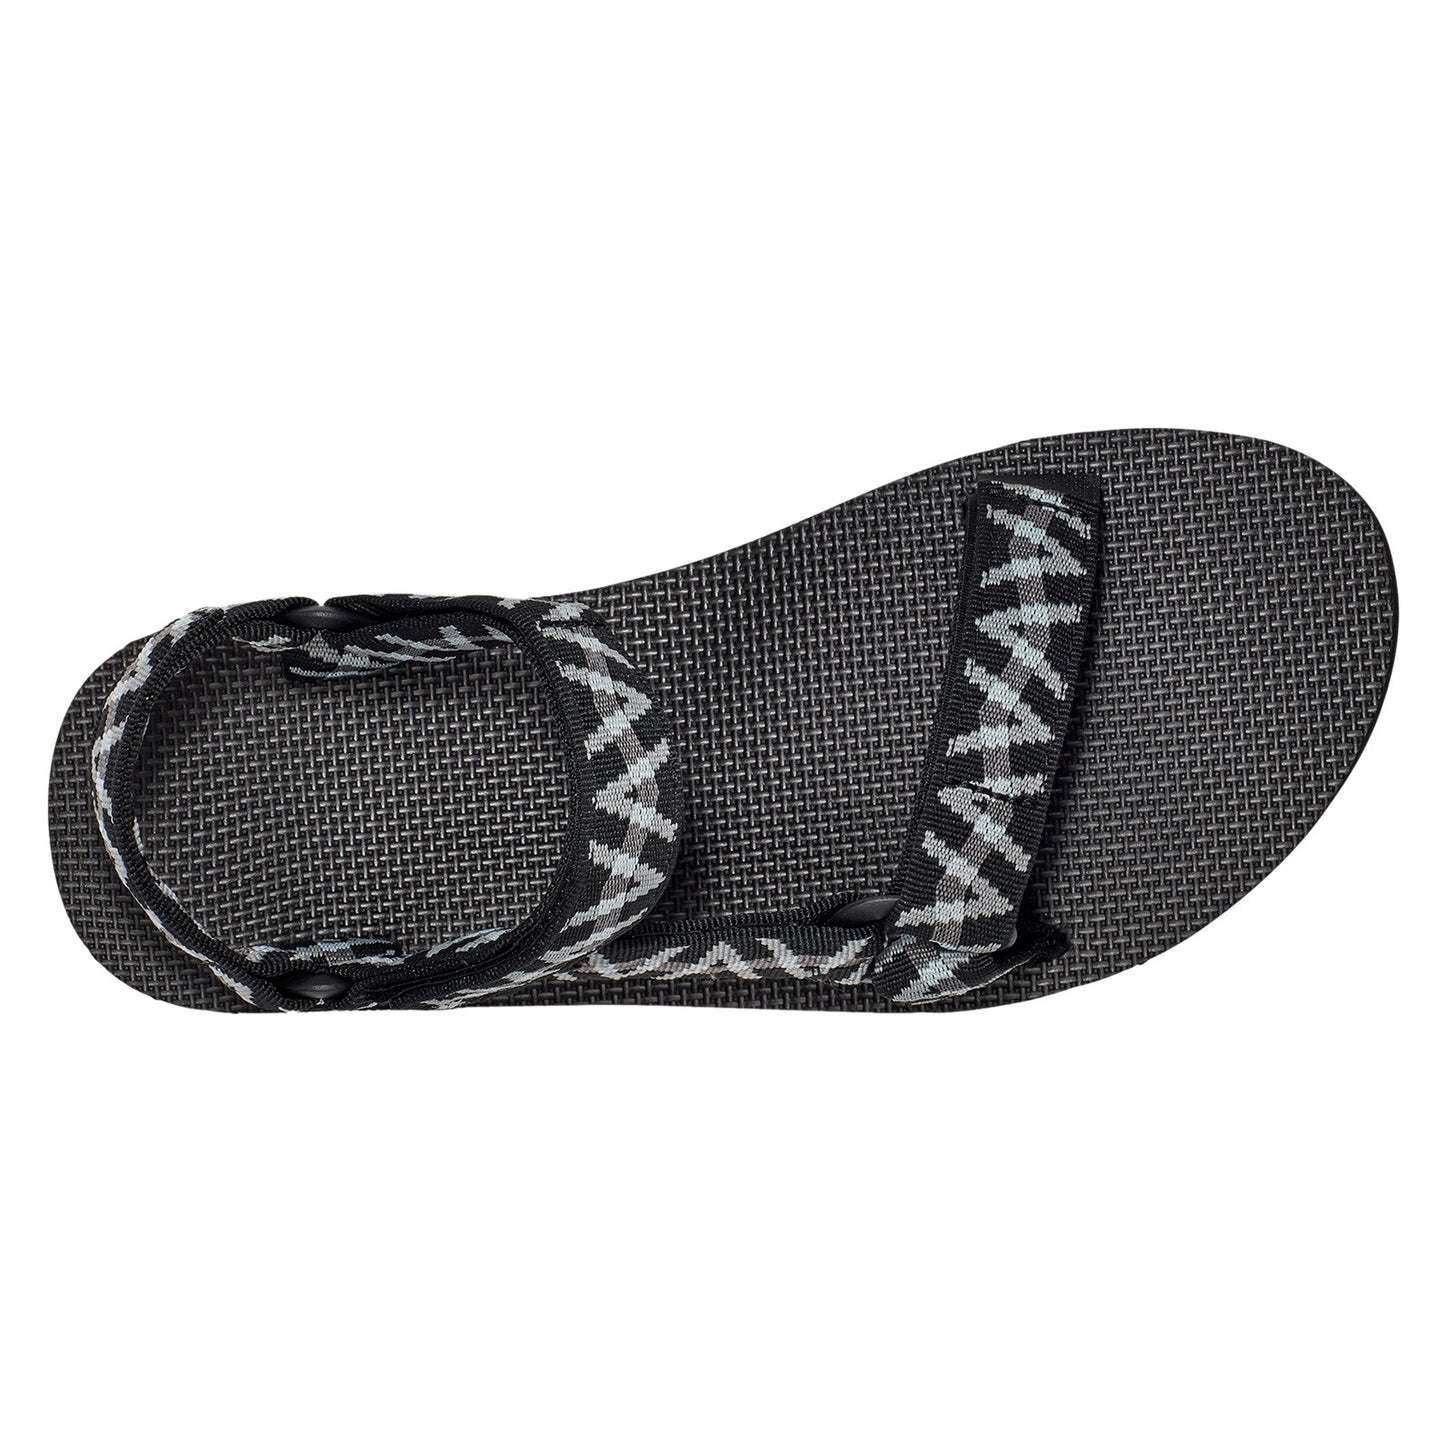 Peltz Shoes  Men's Teva Original Universal Sandal BLACK GREY WHITE 1004006-LSBG